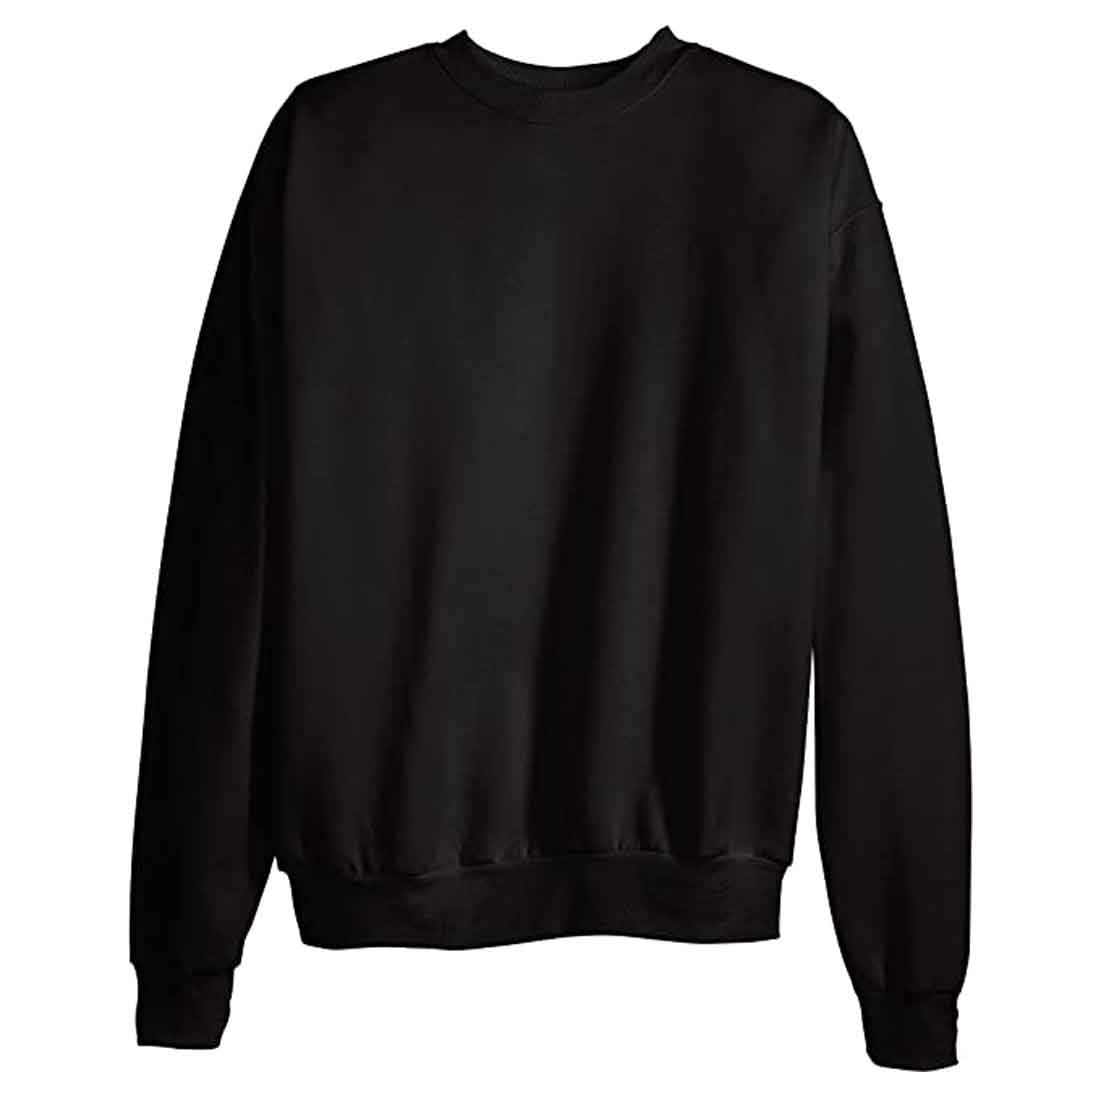 Cotton Printed Crewneck Sweatshirt for Men Stylish Latest - Bombay Boy